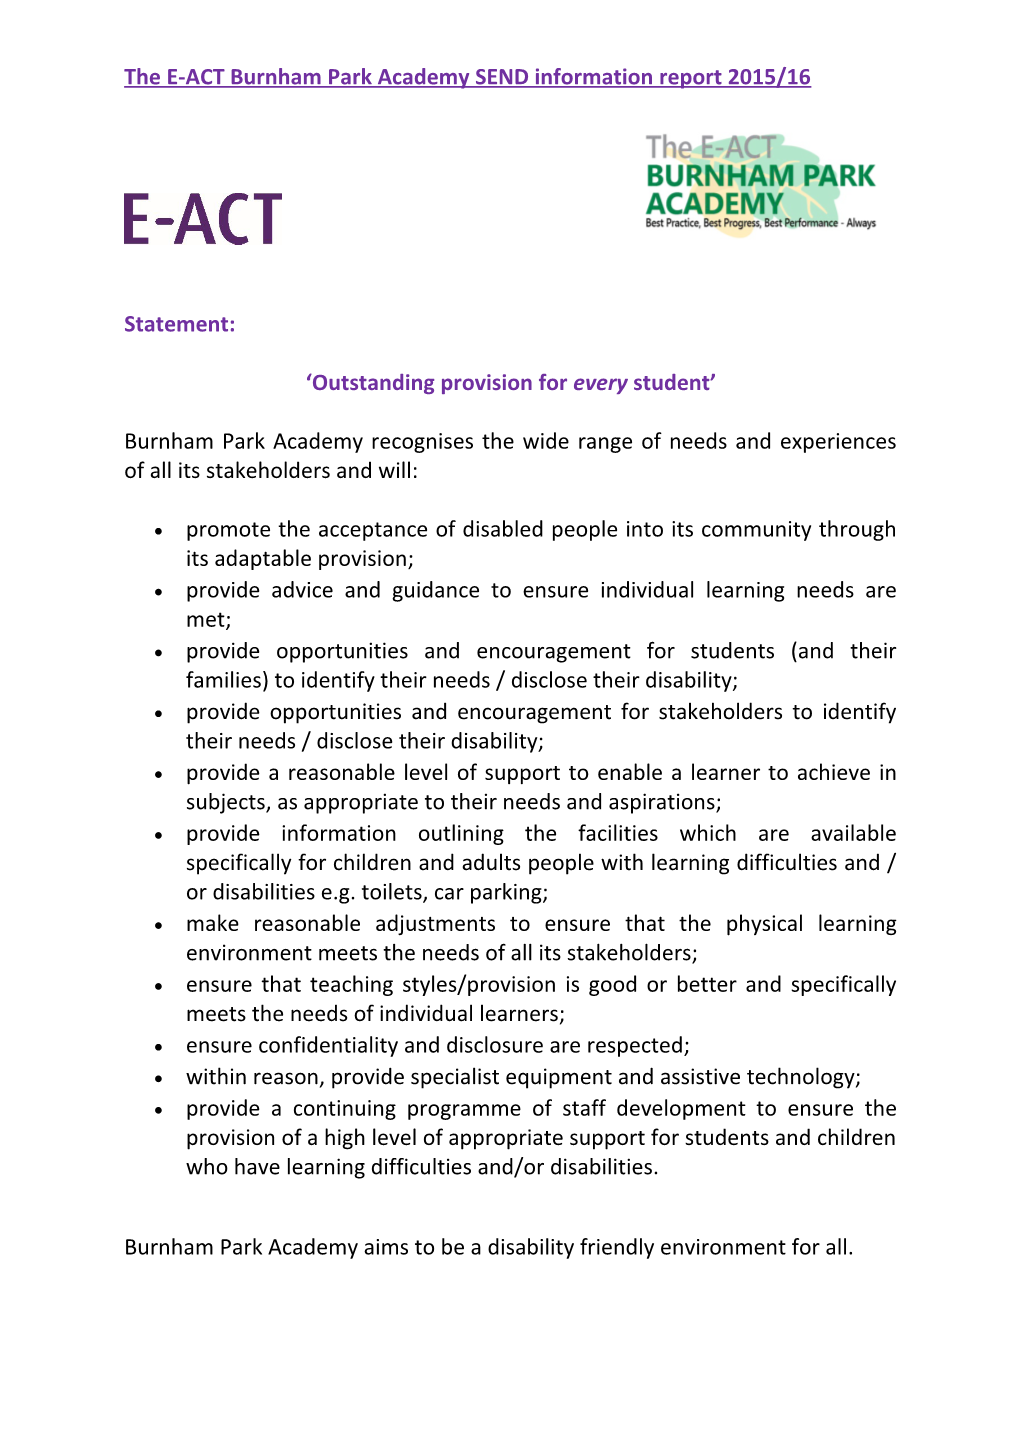 The E-Actburnhamparkacademy SEND Information Report 2015/16